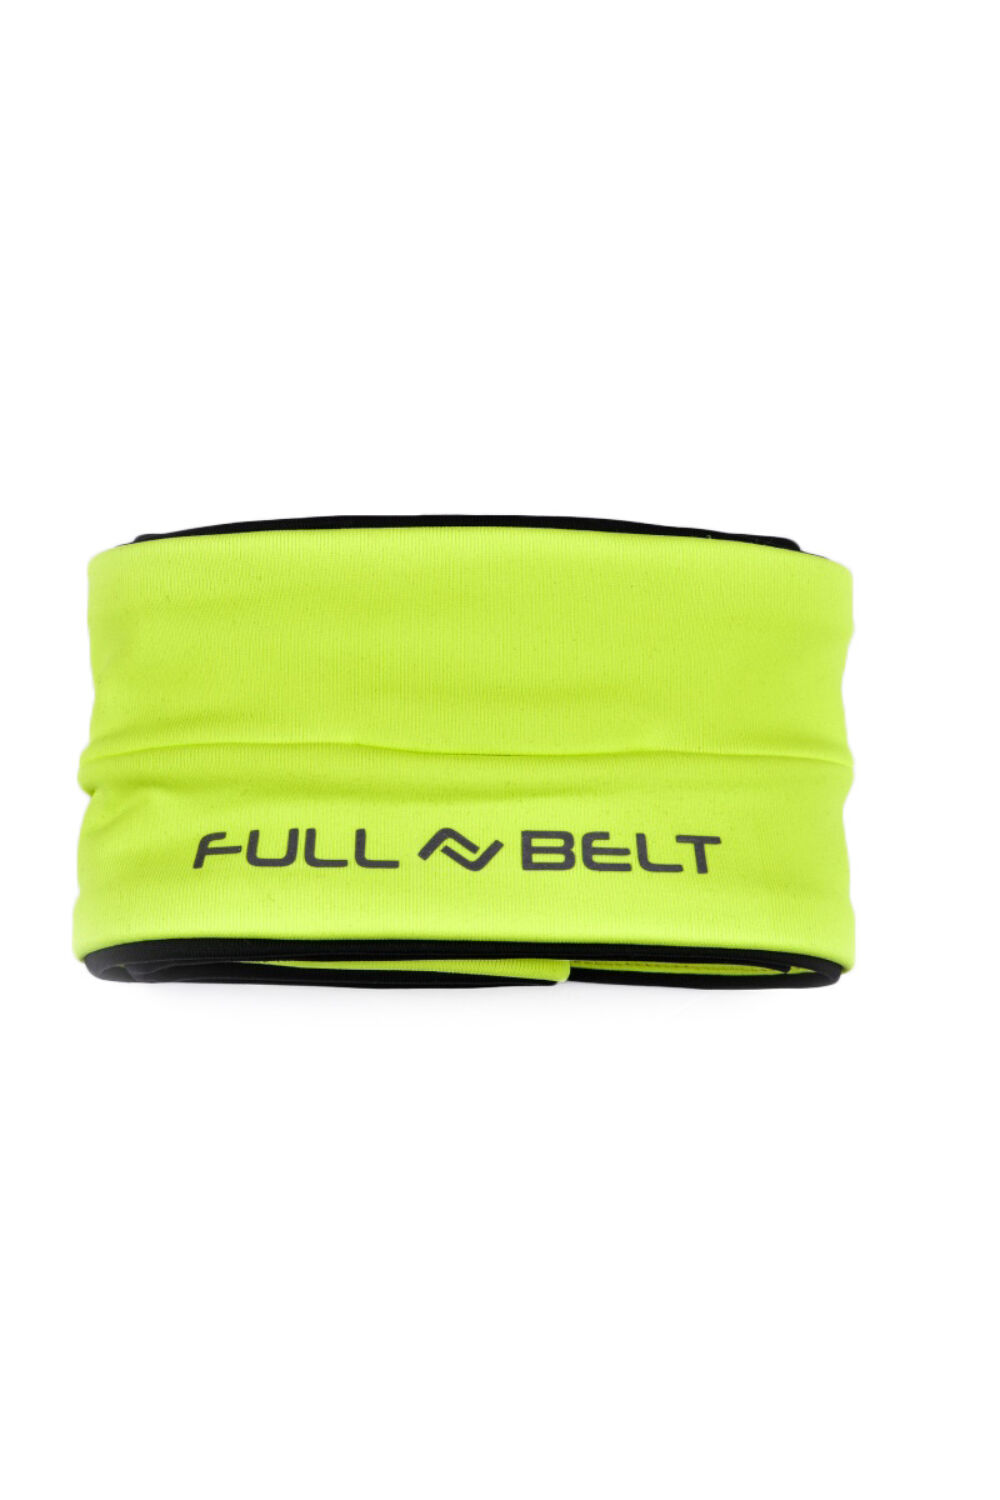 Indi-Go Full-Belt futóöv, pink-fekete